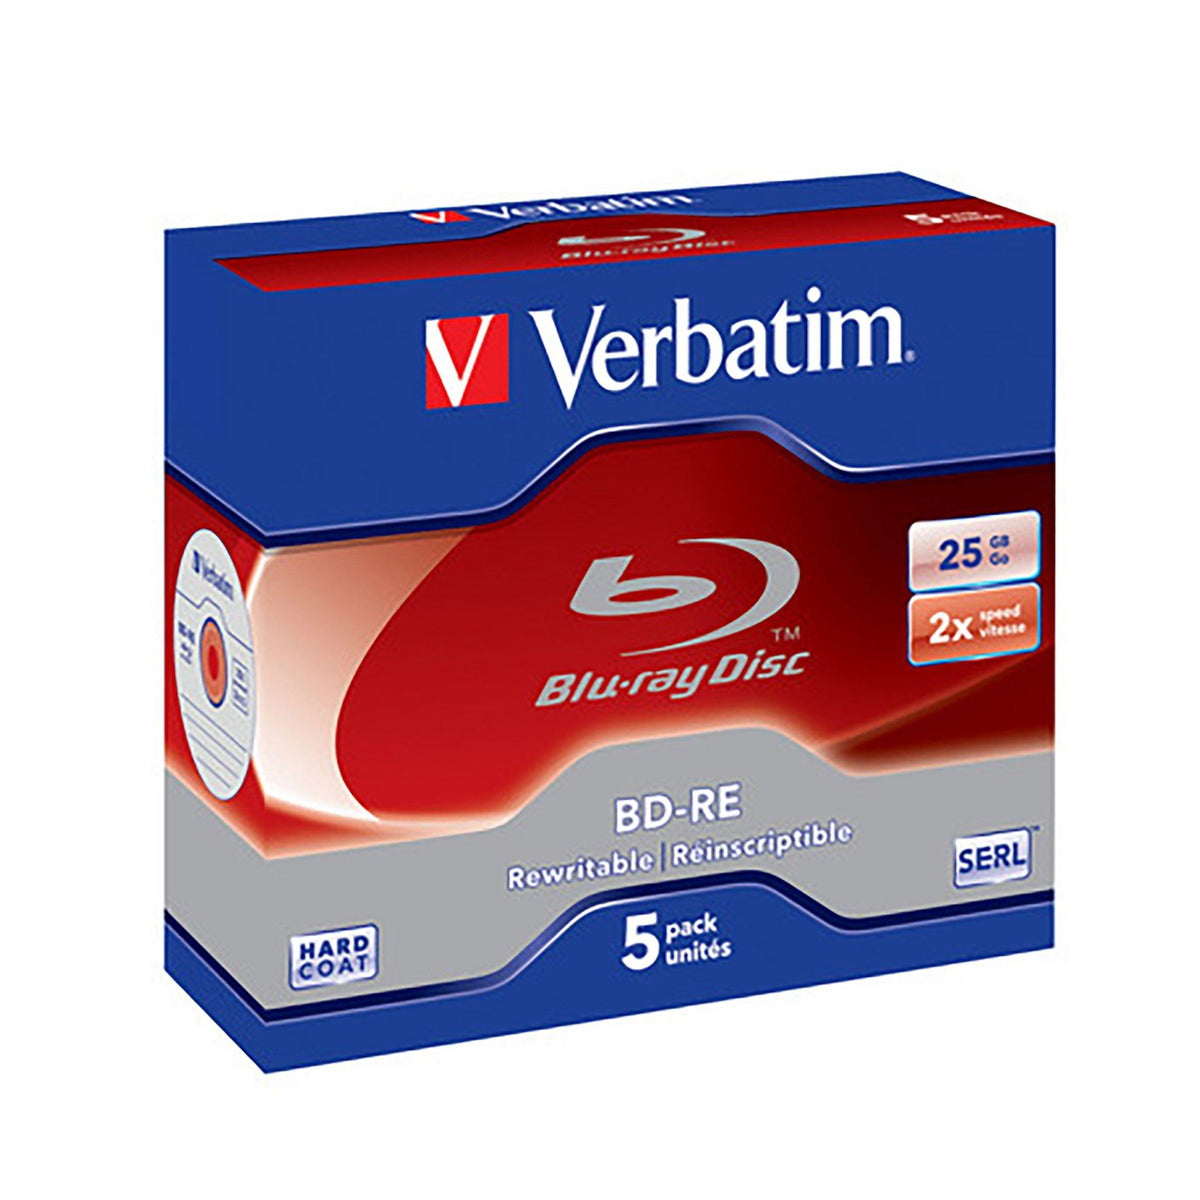 Verbatim Blu-ray BD-RE SL 25GB Branded - Standard Case (5 Pack